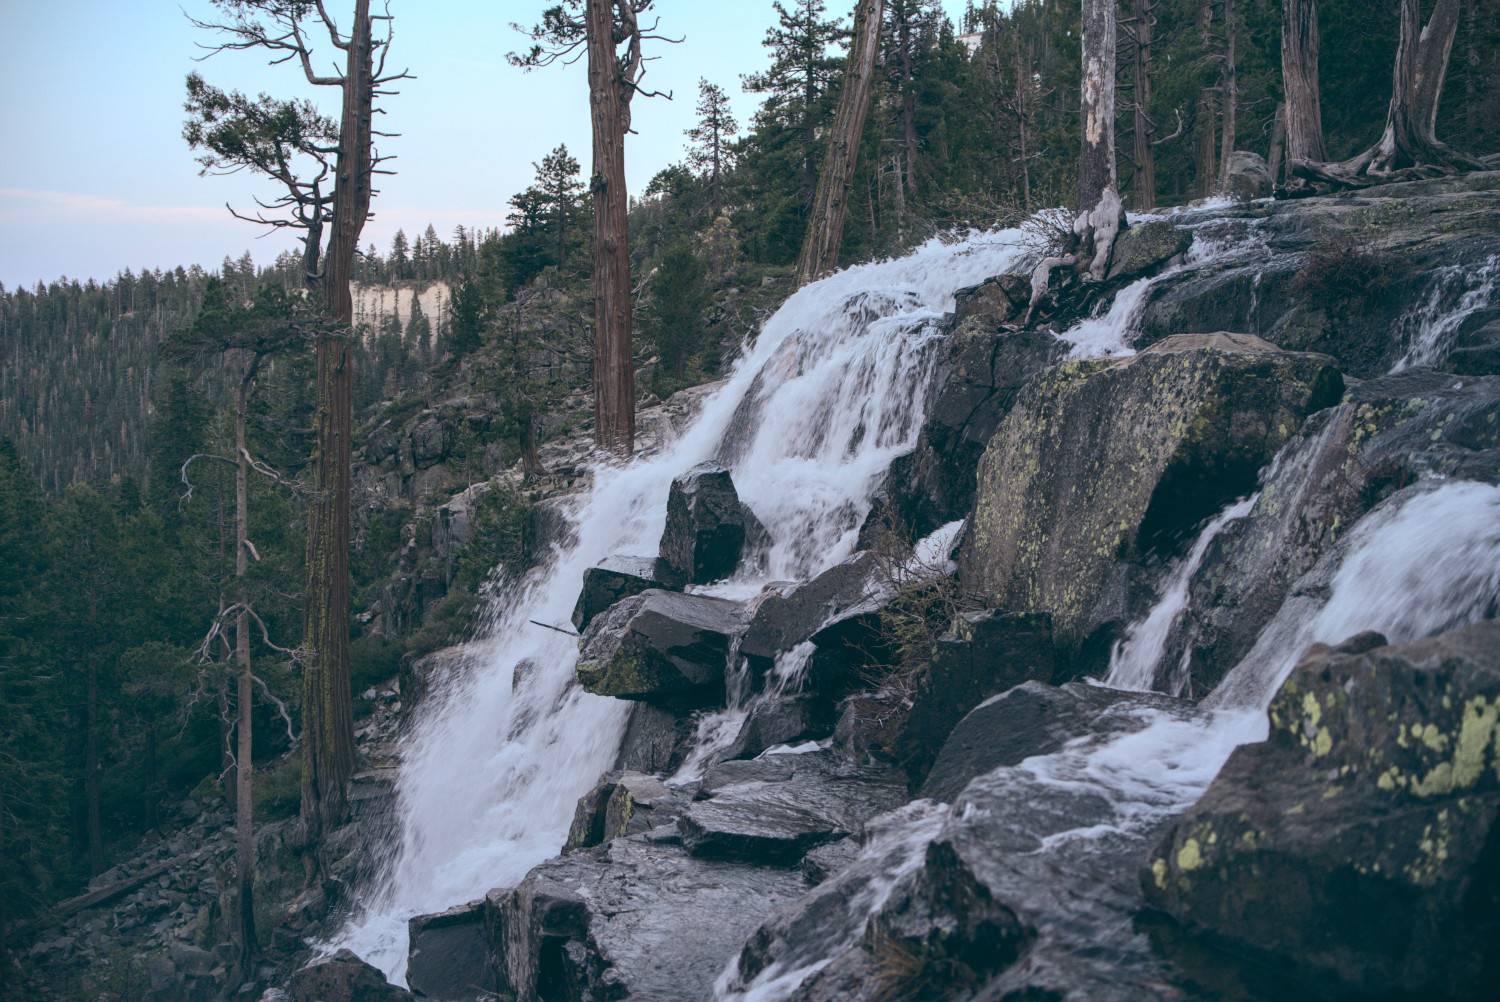 Waterfall that flows each spring